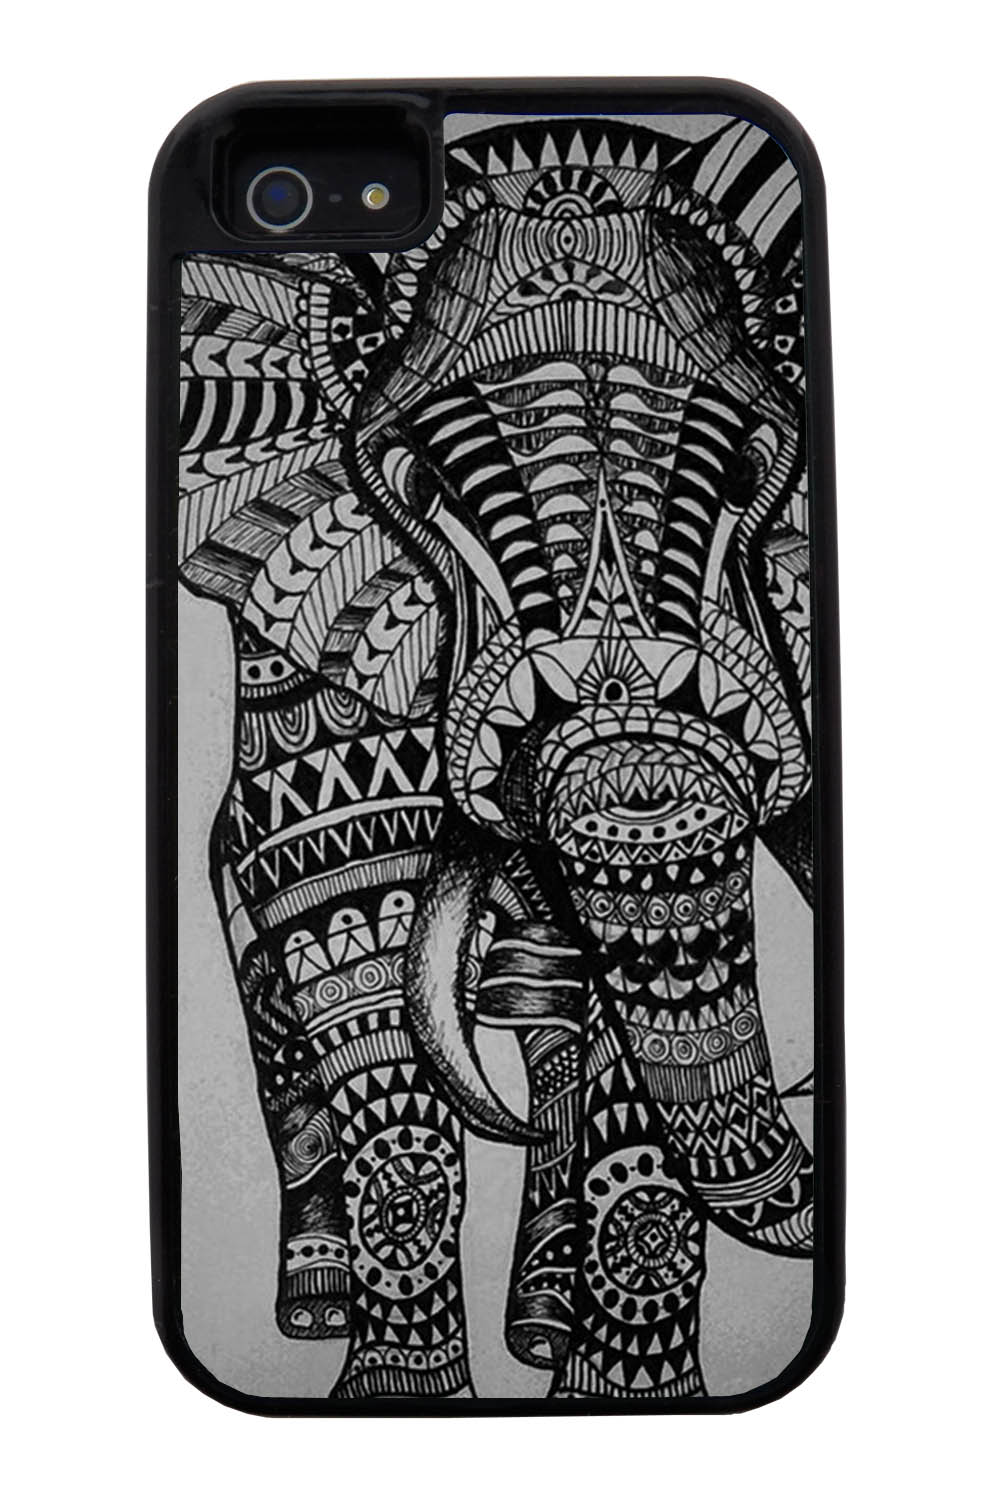 Apple iPhone 5 / 5S Aztec Case - Pen Drawing on Grey - Tribal Elephant - Black Tough Hybrid Case